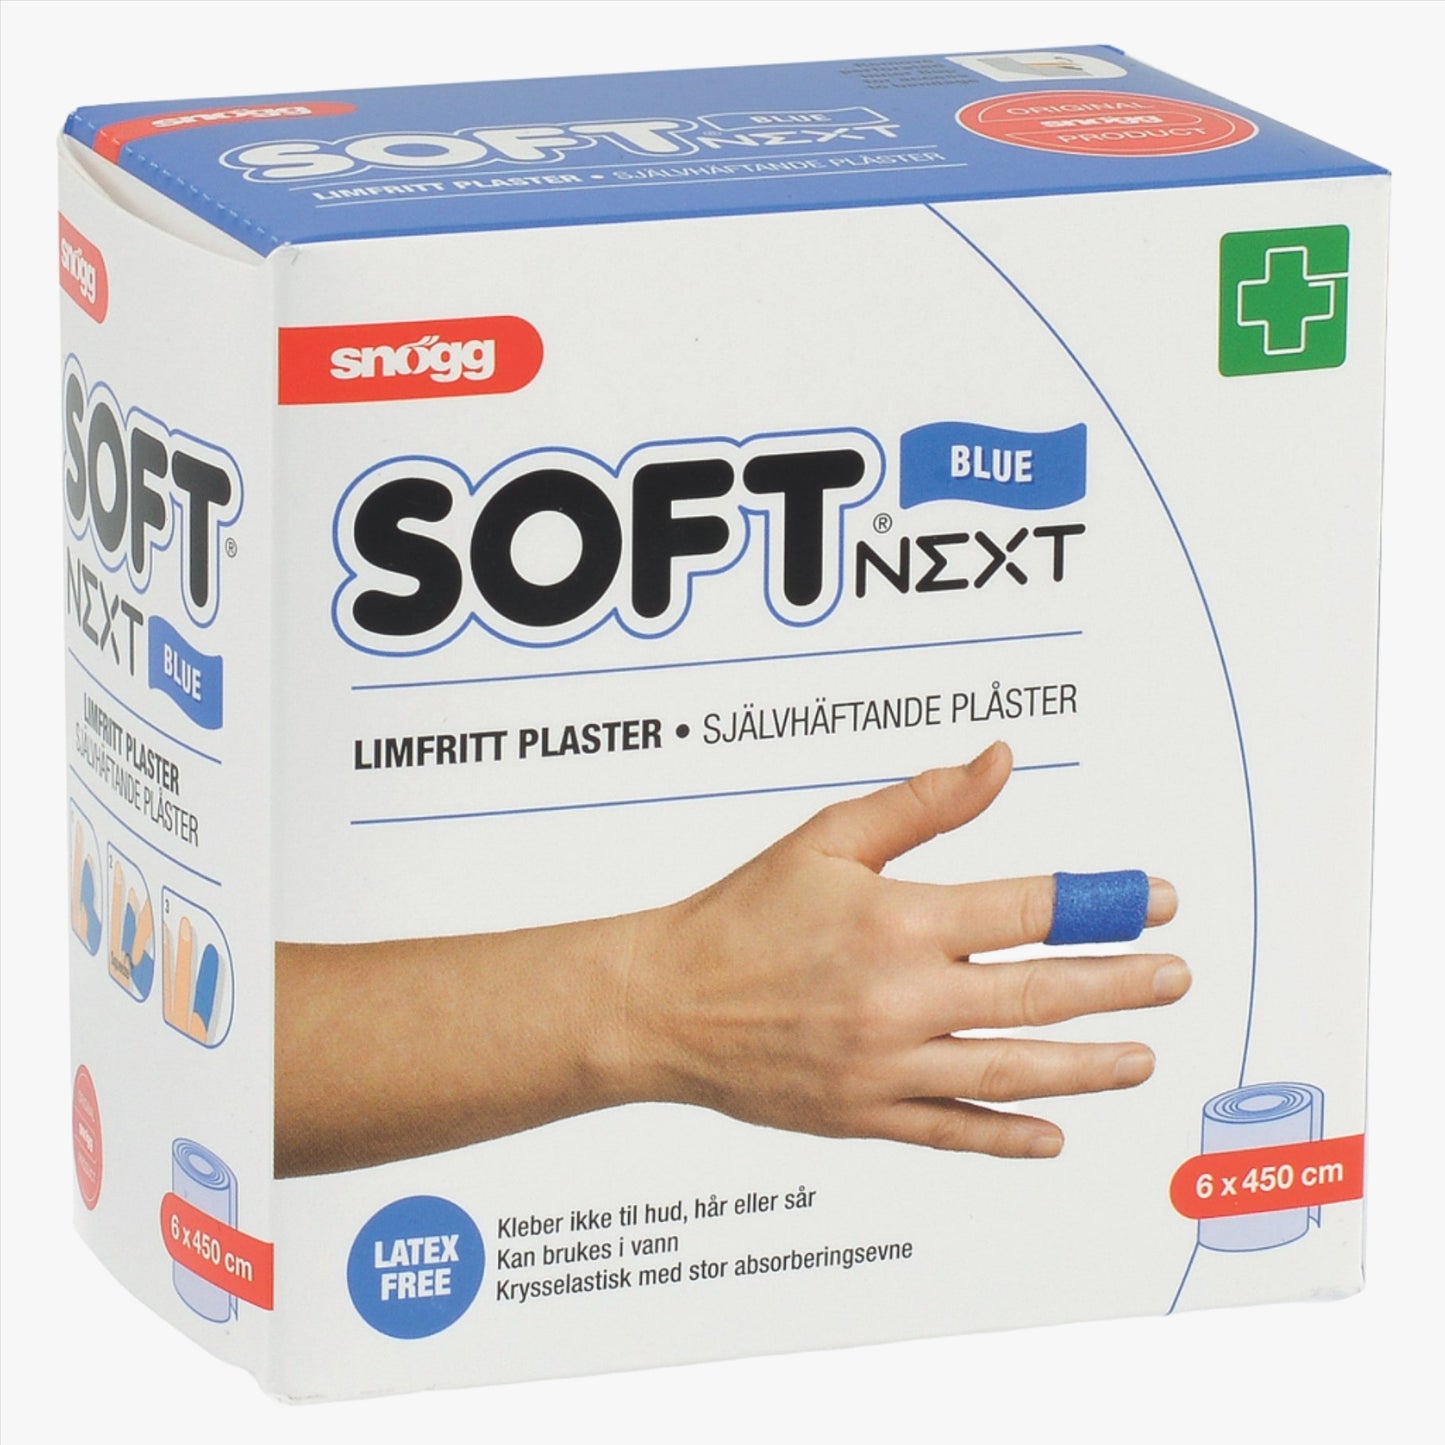 Snögg Soft Next Finger Bandage Blue 6 x 450 cm